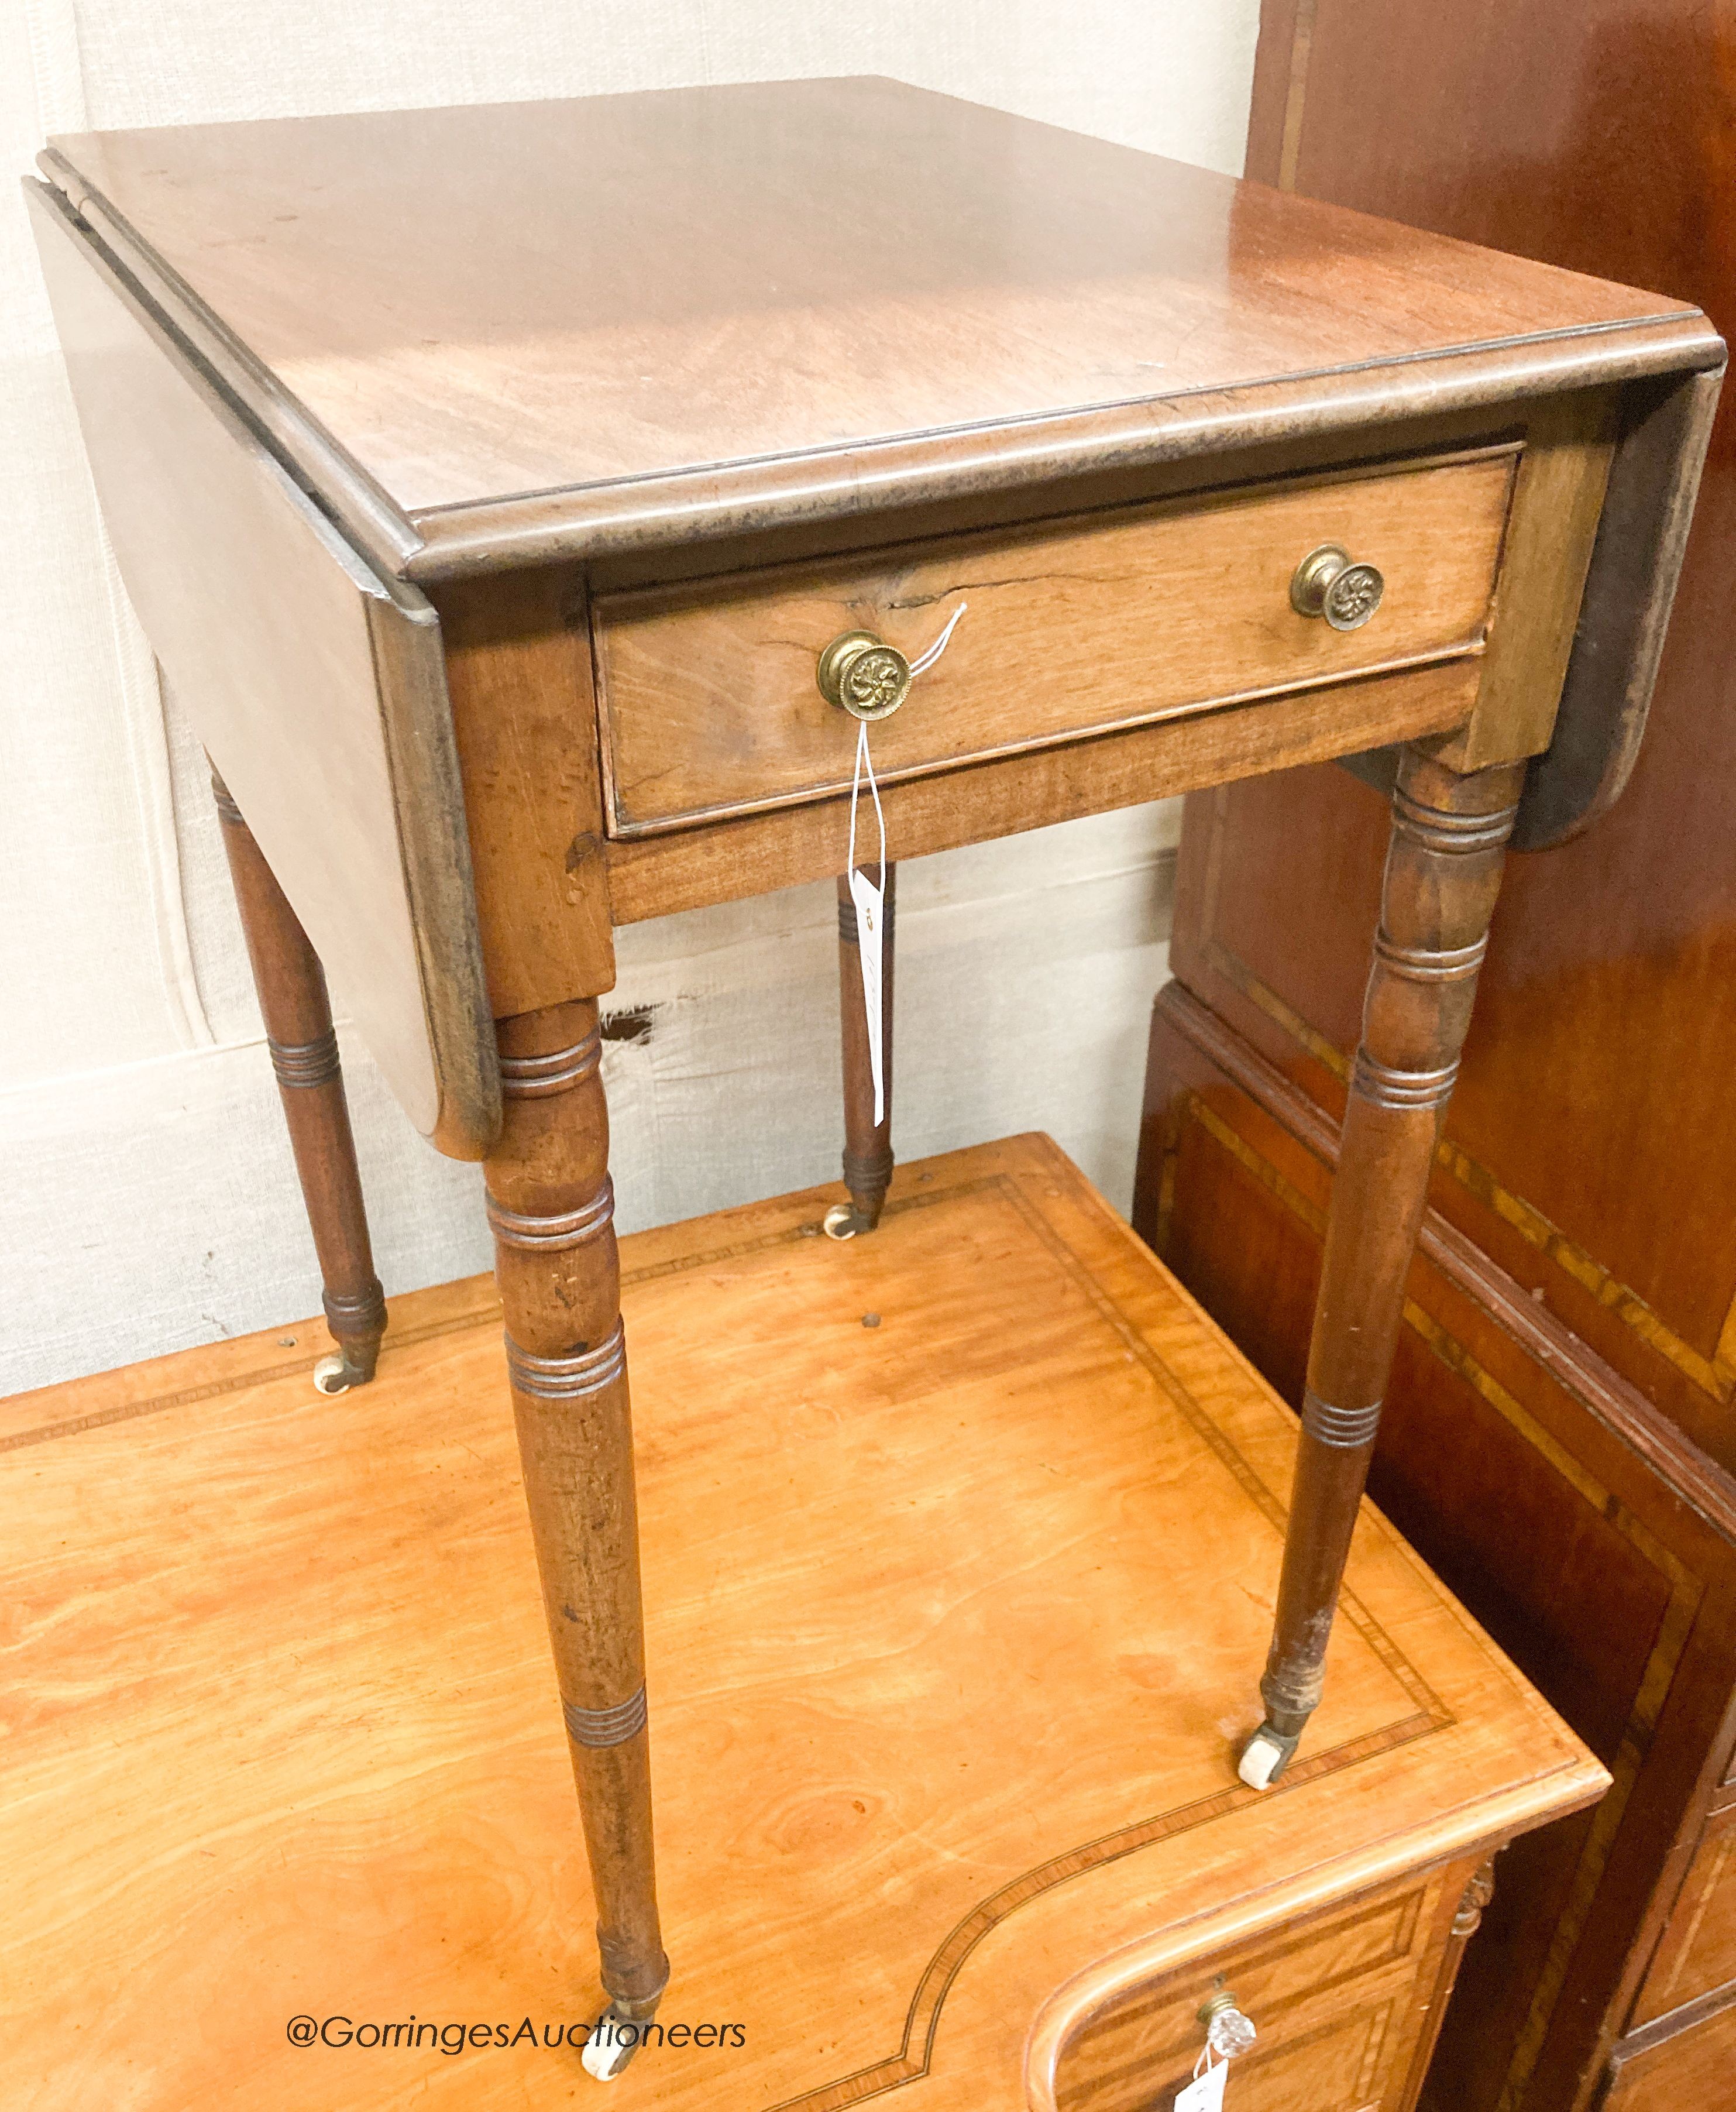 A Regency mahogany drop flap, work table, width 42cm, depth 54cm, height 70cm